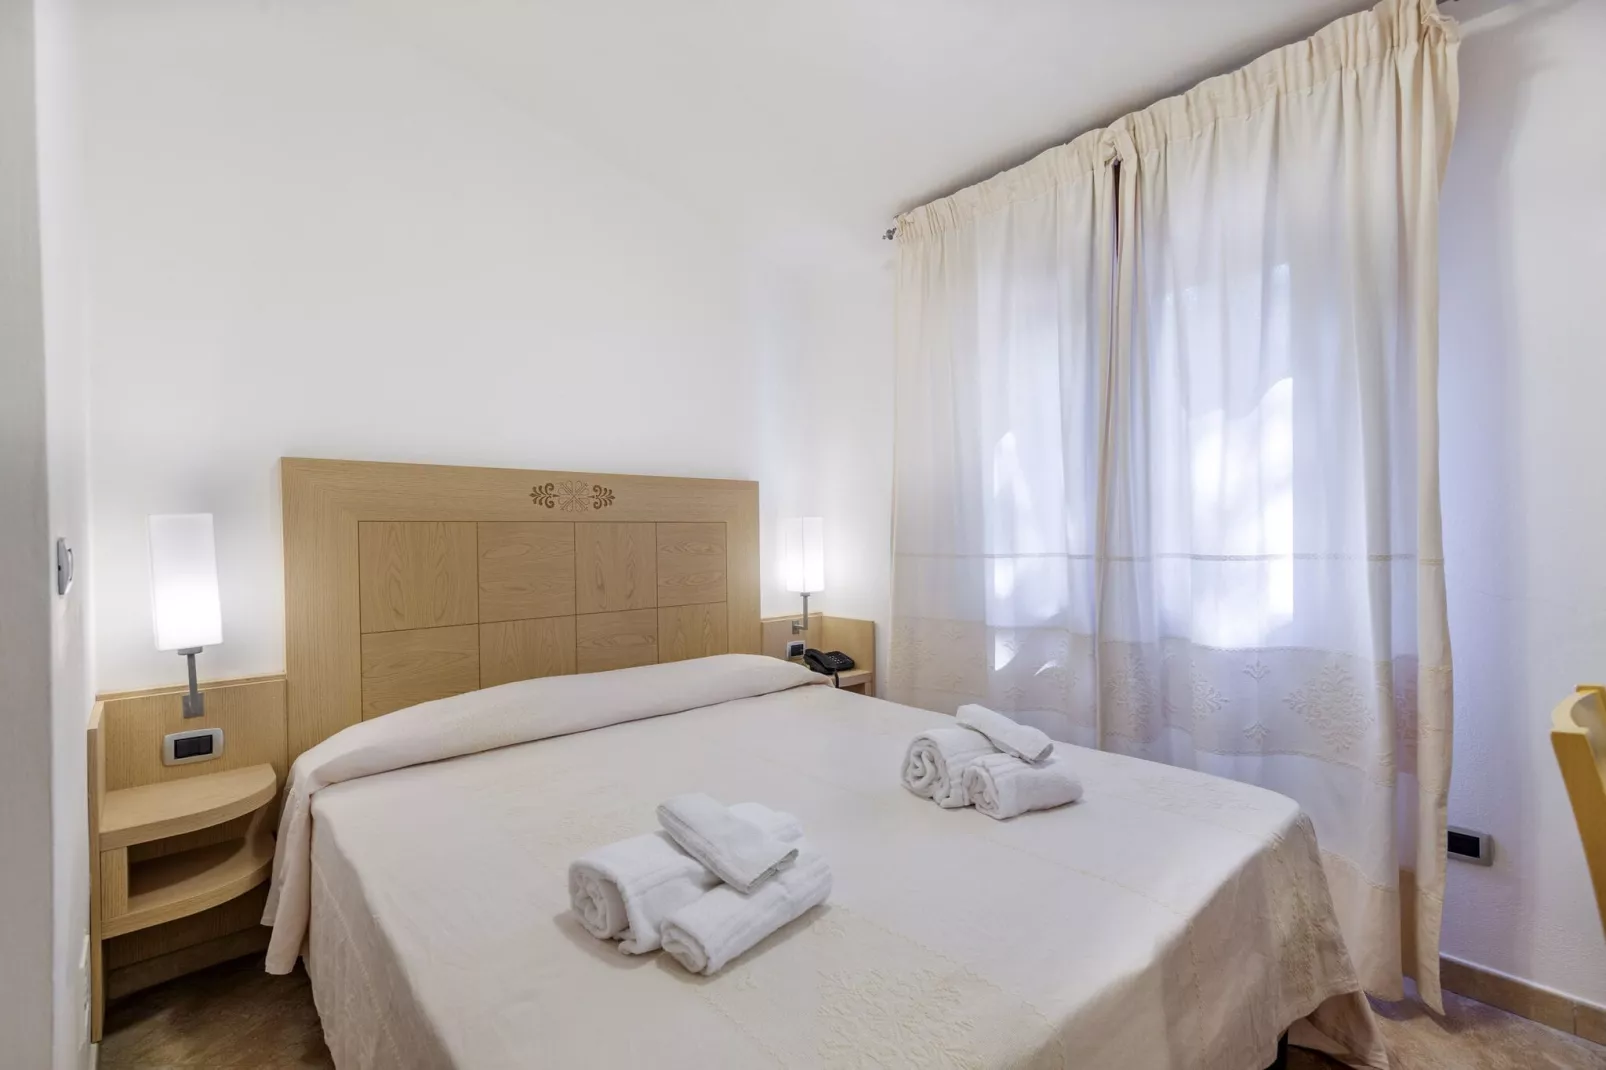 Holiday residence Baia Verde, Valledoria-1 Bedroom Prestige im EG oder 1 St. mit Balkon o T